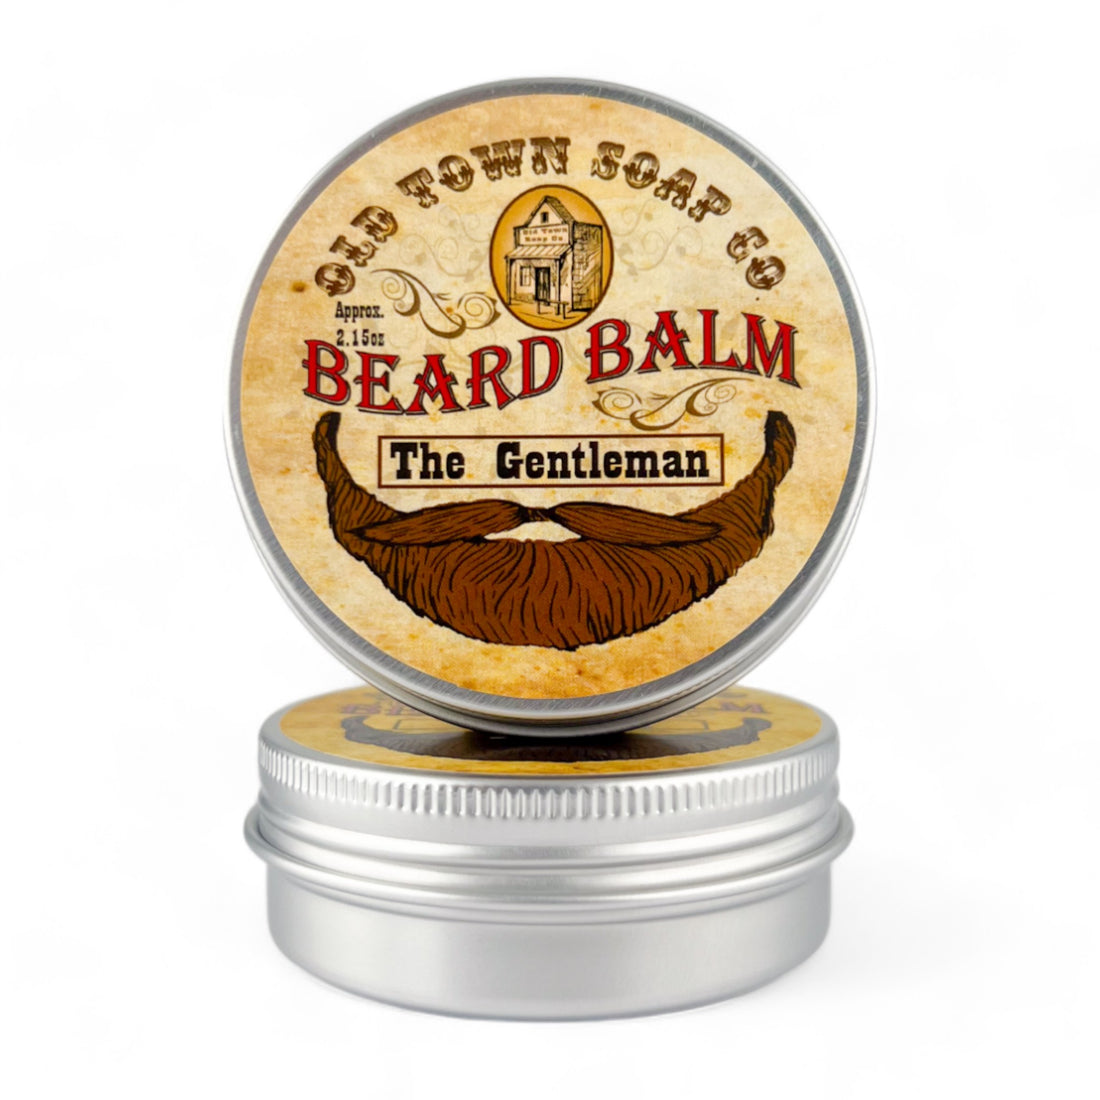 The Gentleman Beard Balm - Old Town Soap Co.